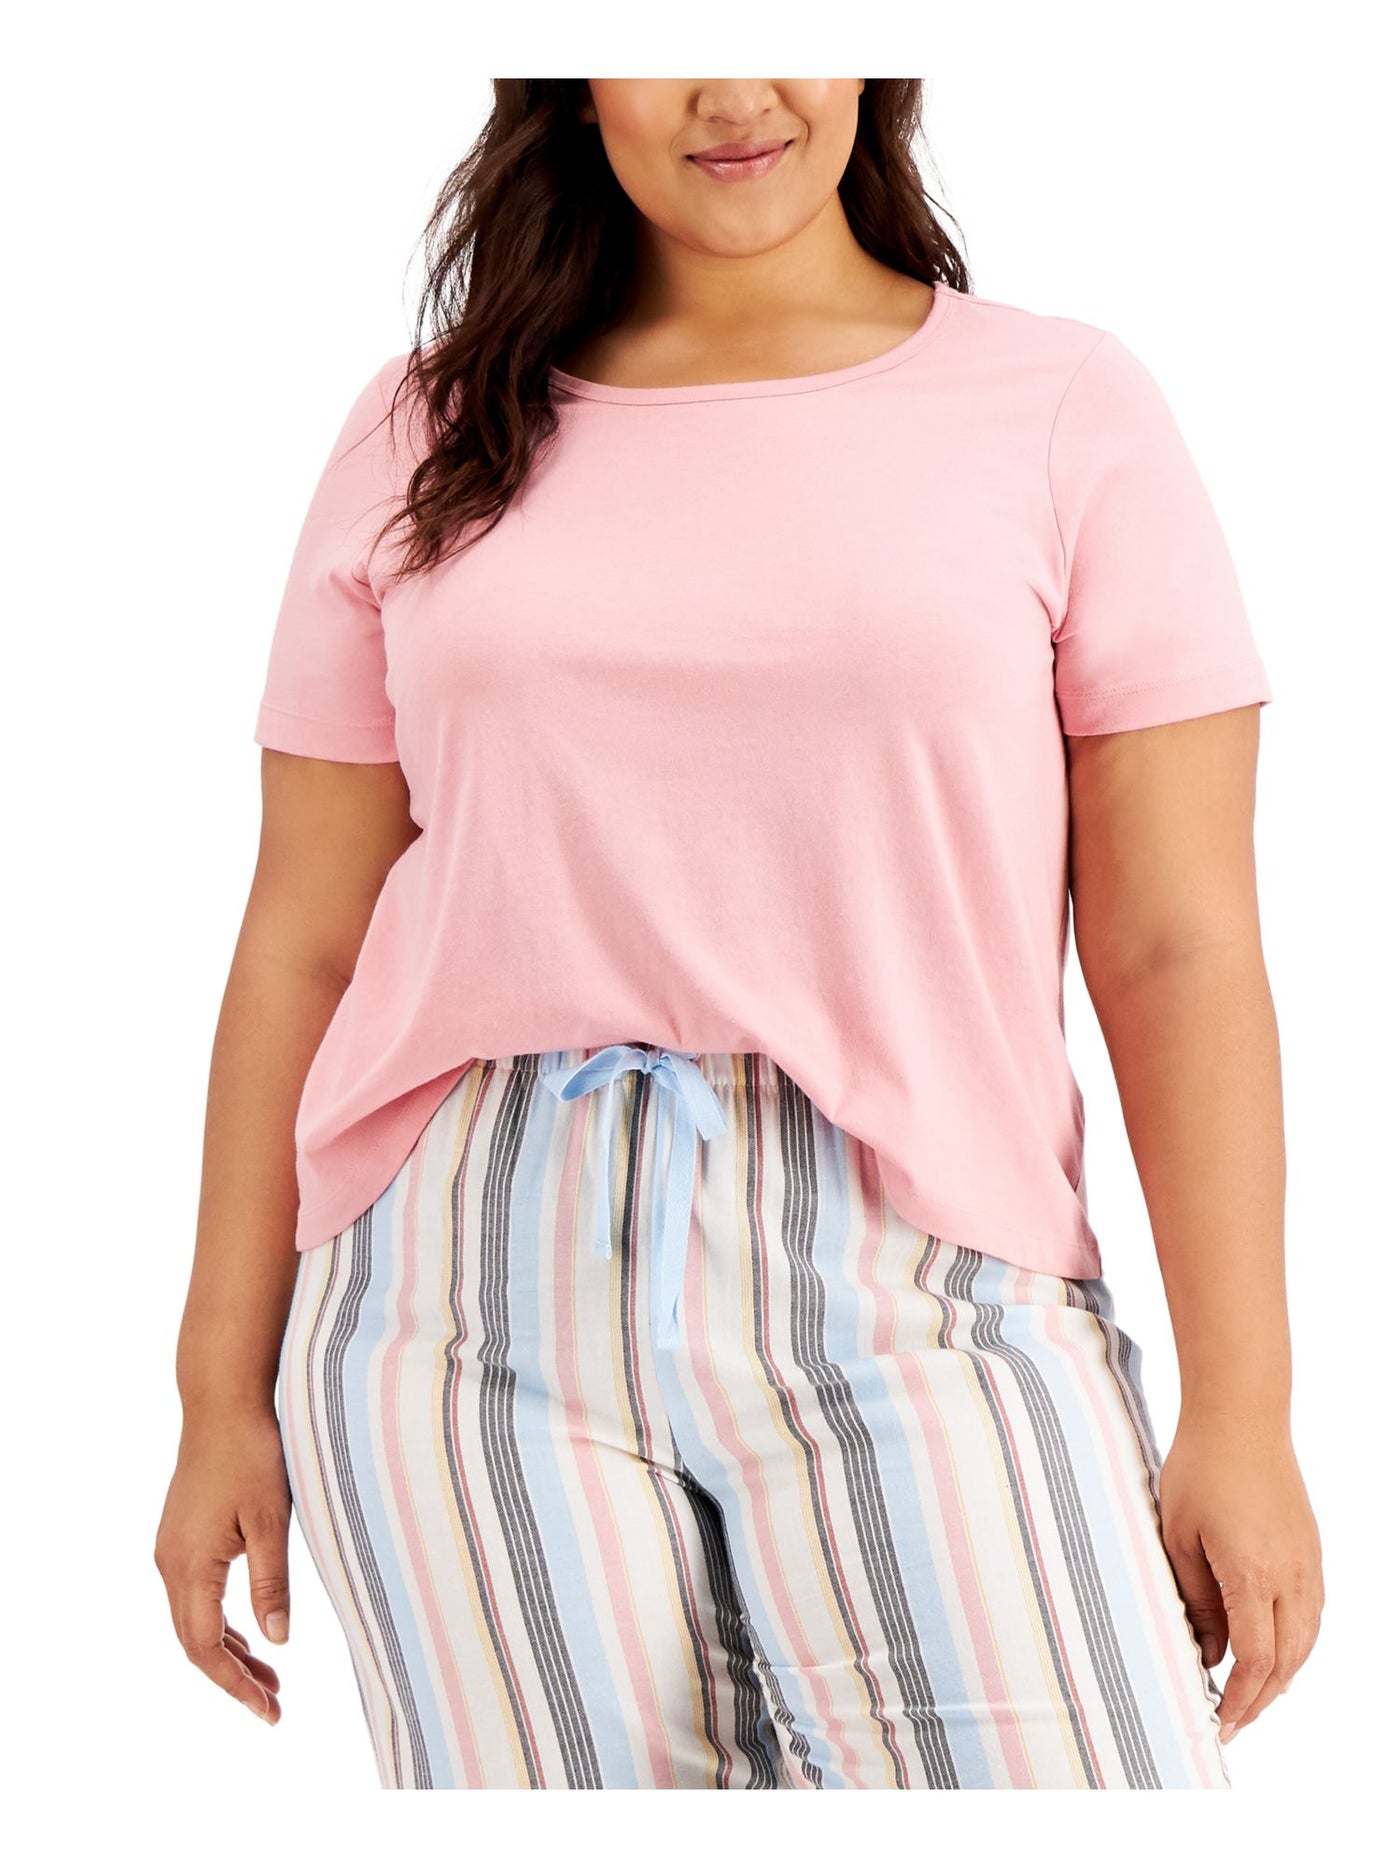 JENNI Intimates Pink Cotton Blend Short Sleeves Rib-Knit Trim Sleep Shirt Pajama Top Plus 1X